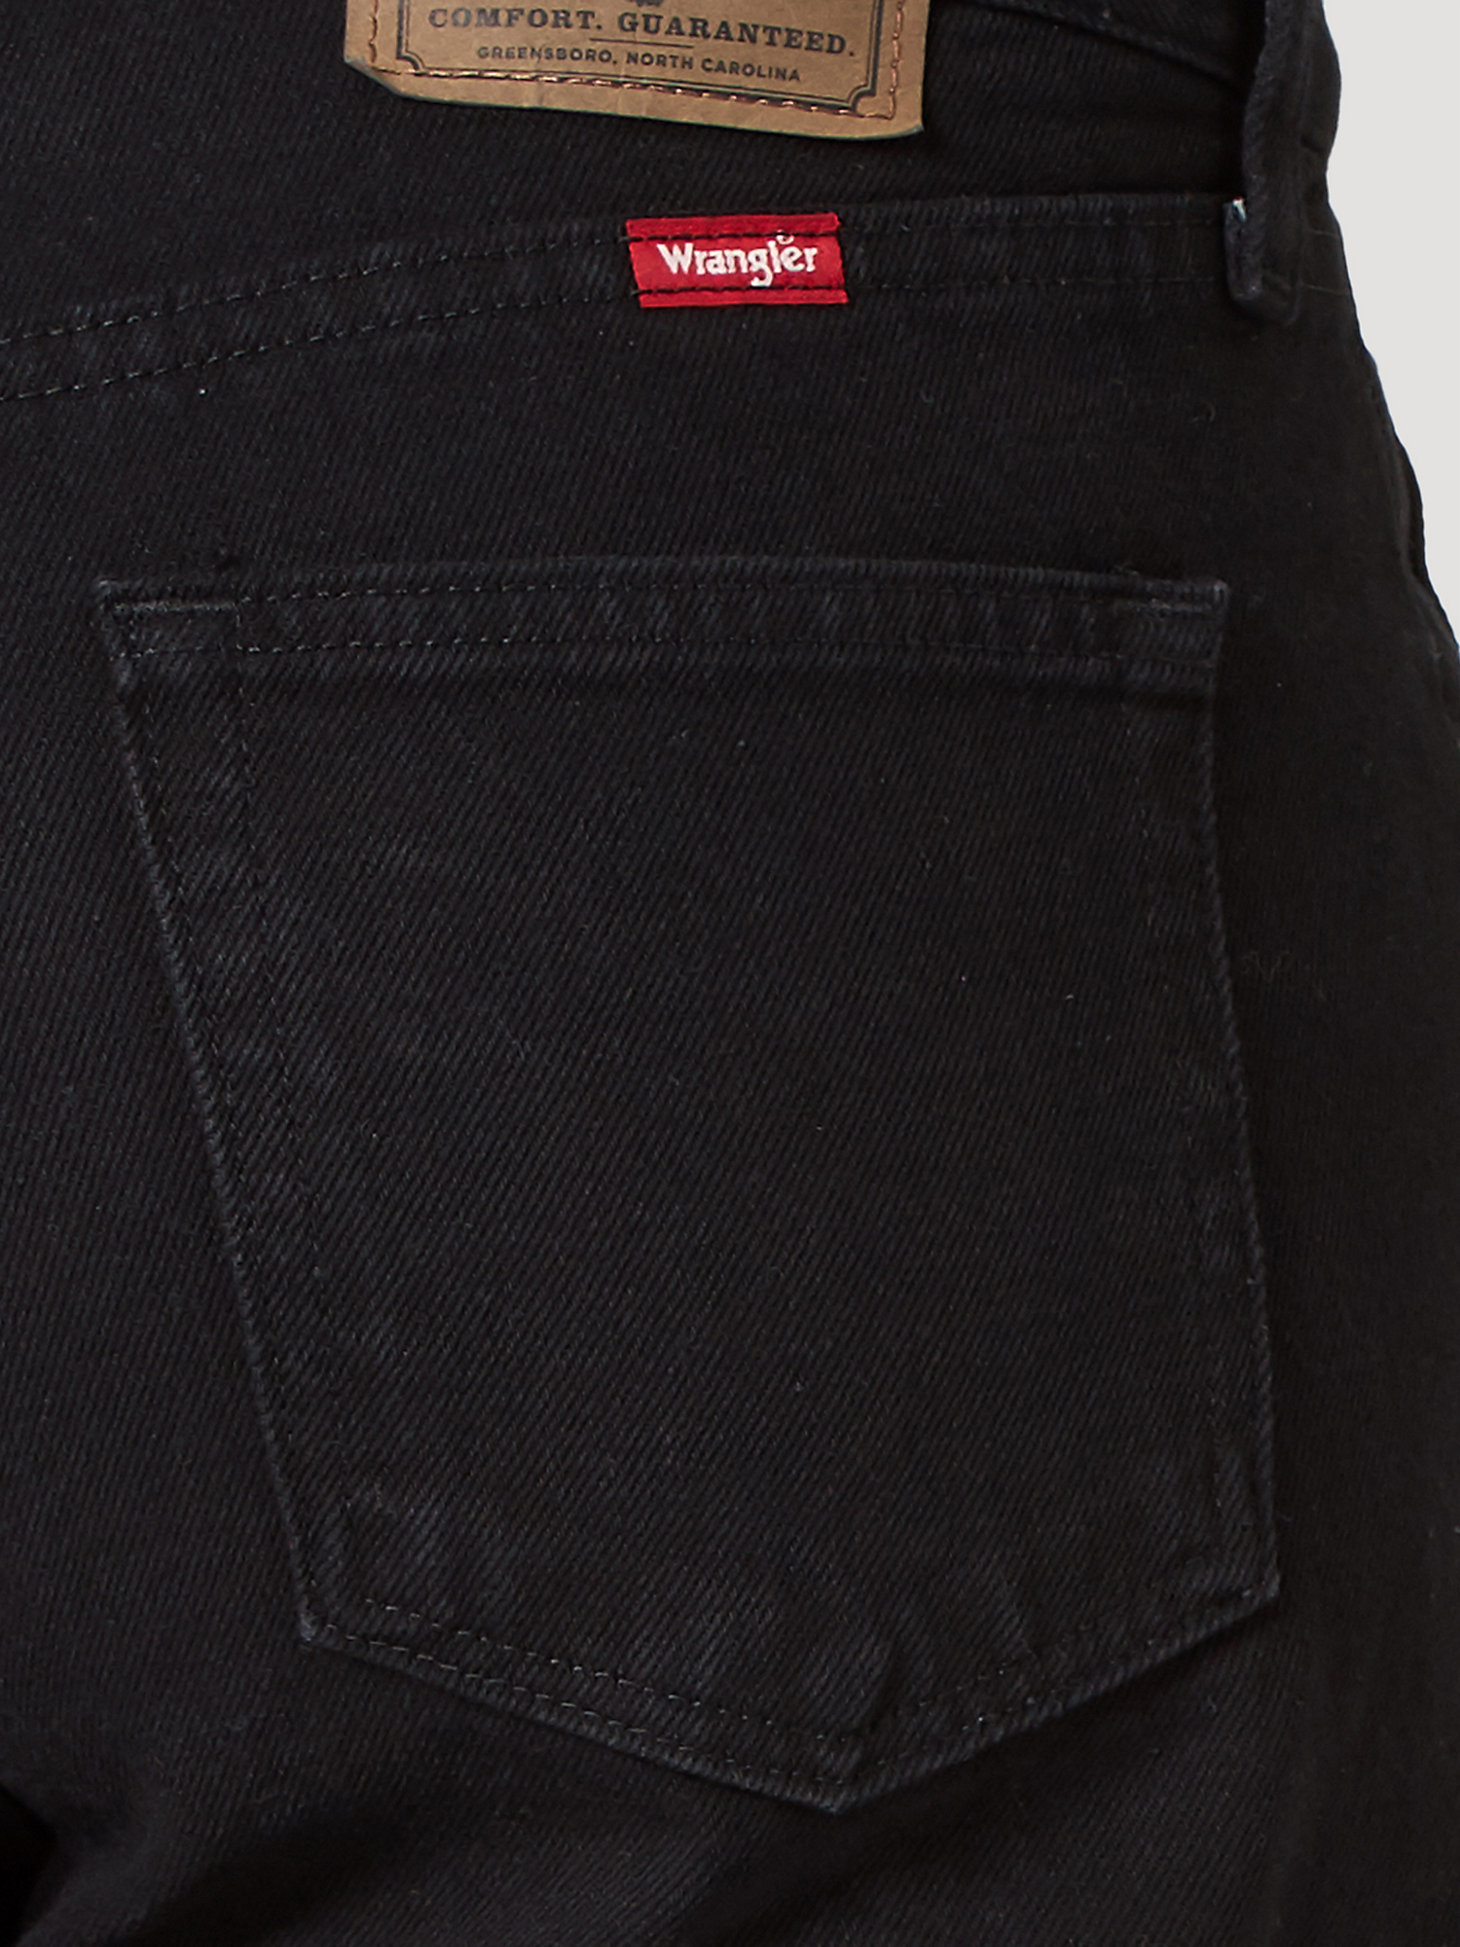 Wrangler® Five Star Premium Denim Relaxed Fit Jean in Coal Black alternative view 3